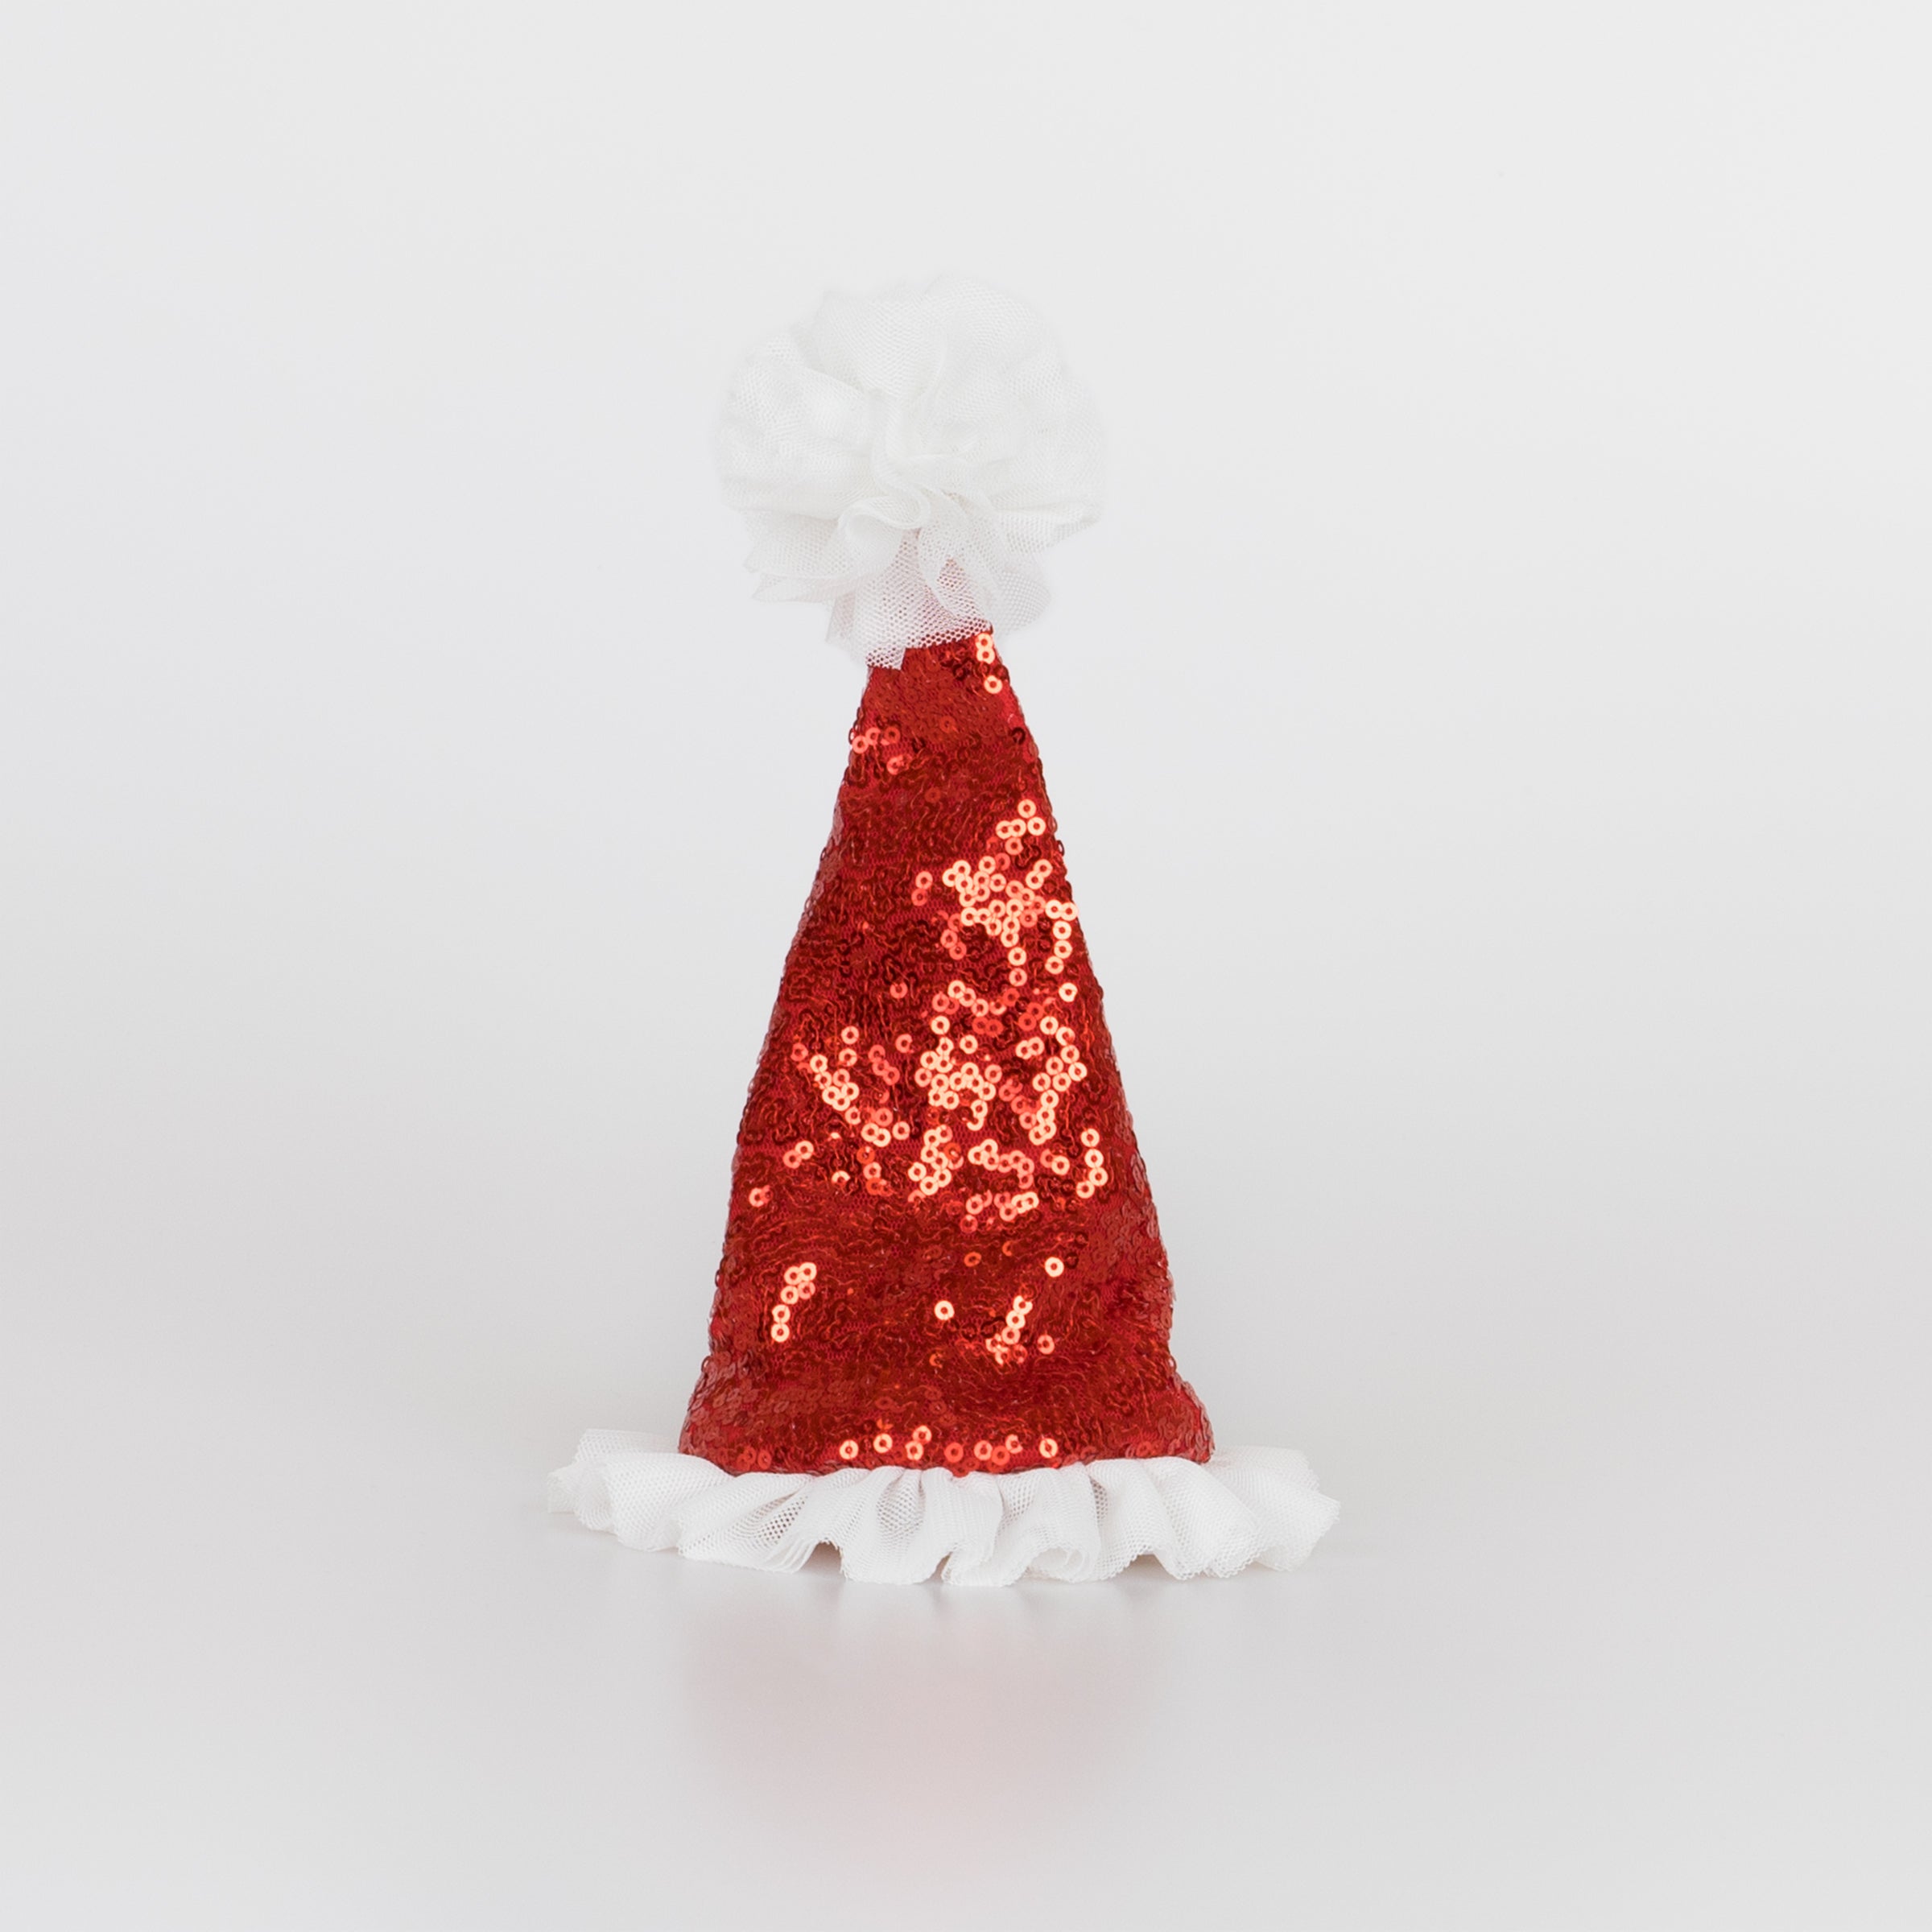 Our Santa hat, designed as Christmas hair clip, is a fabulous kids hair accessory.